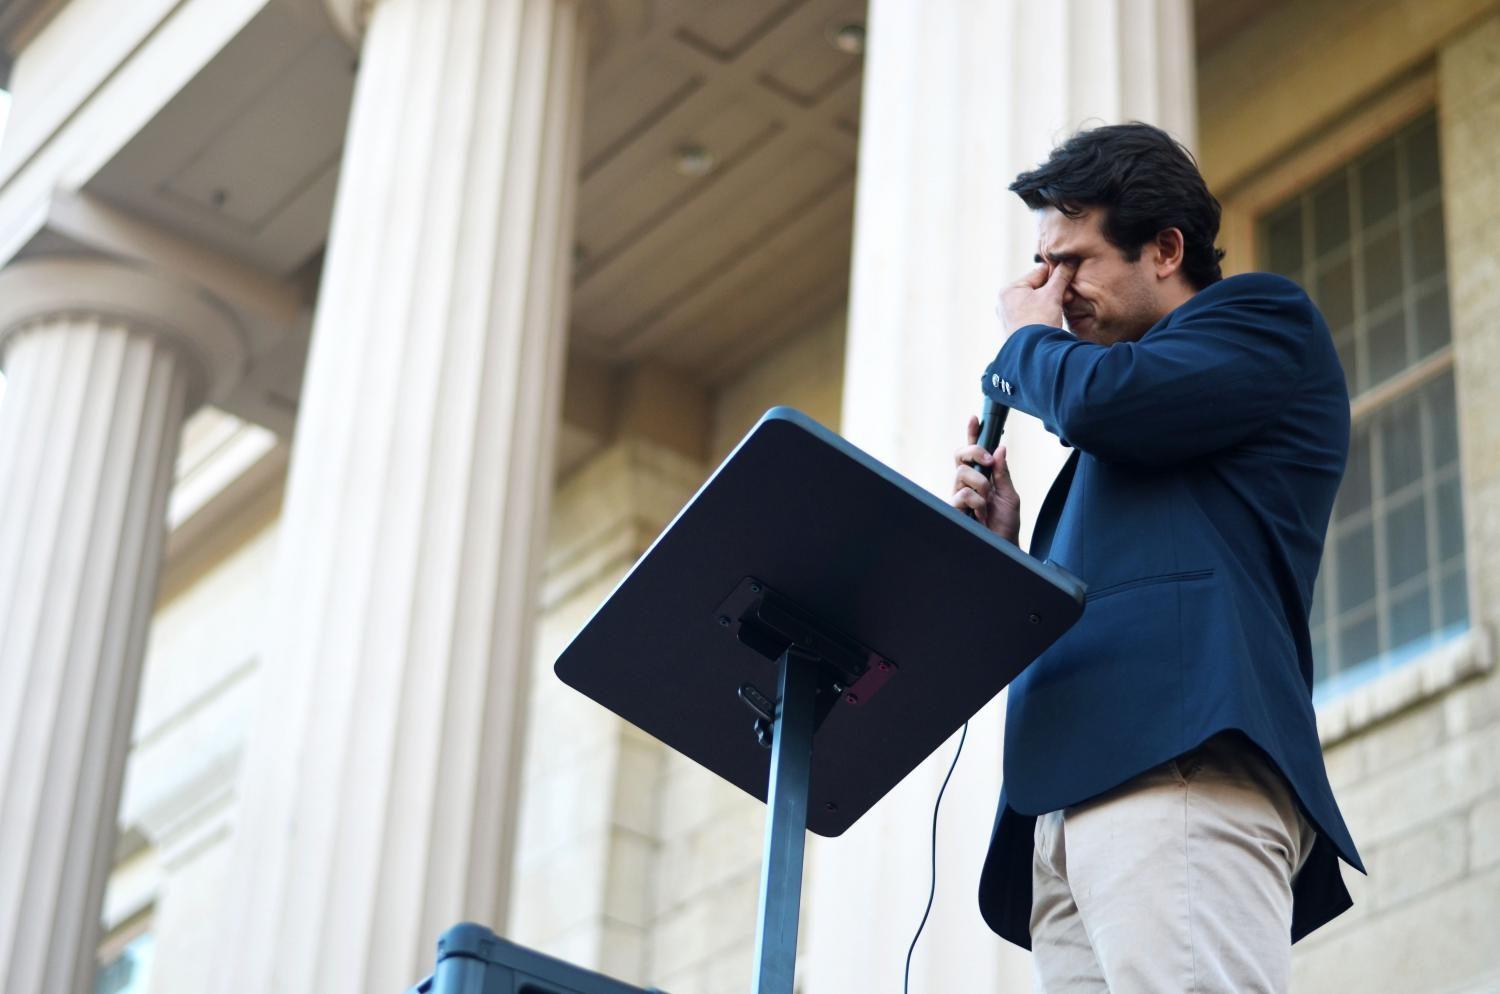 Protest organizer Emiliano Martinez gets emotional after a DACA recipient shares their story.